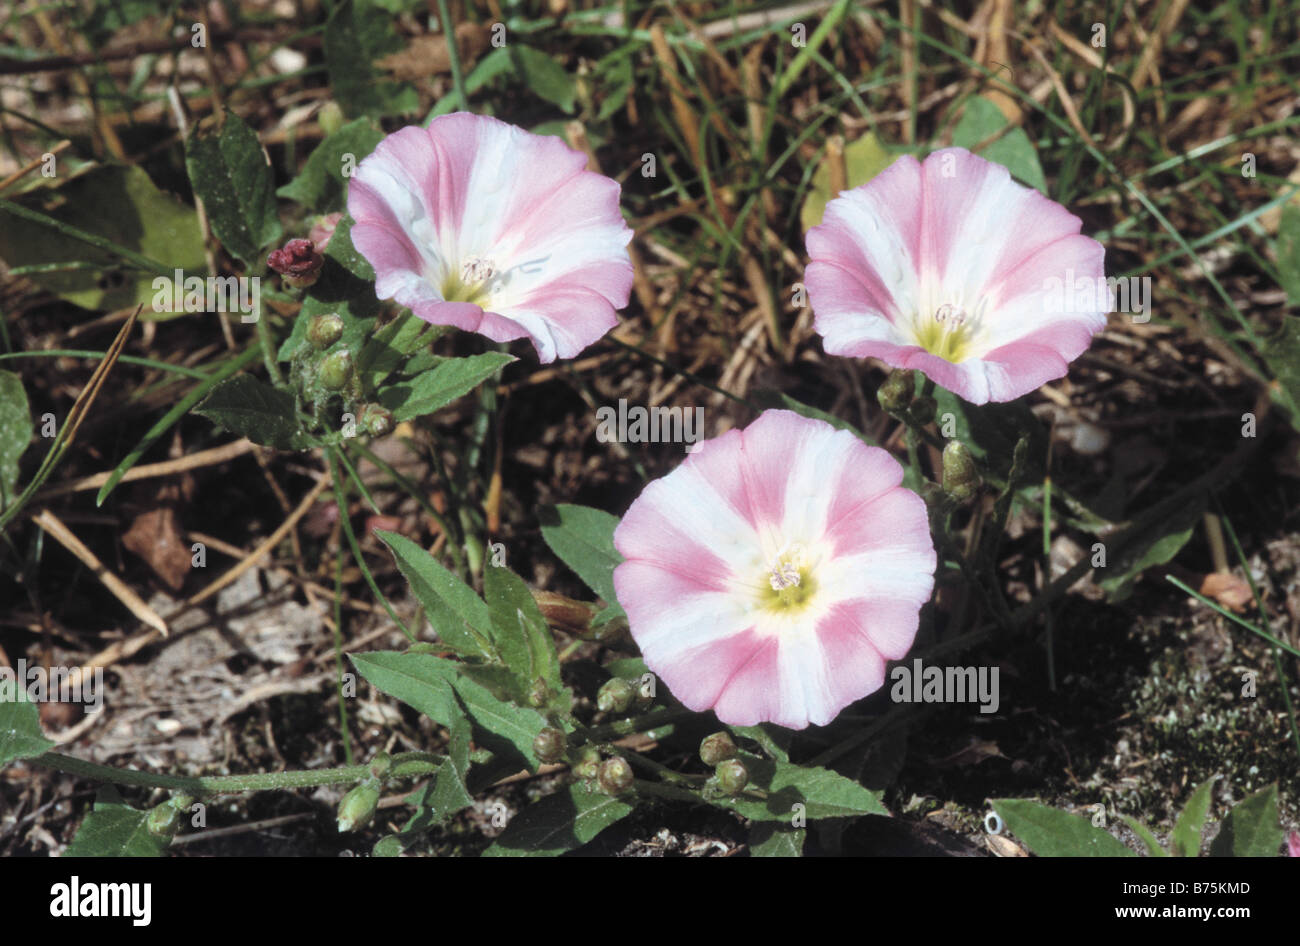 Helianthemum apenninum white rock rose flower bloom blossoms bloomings plant Stock Photo